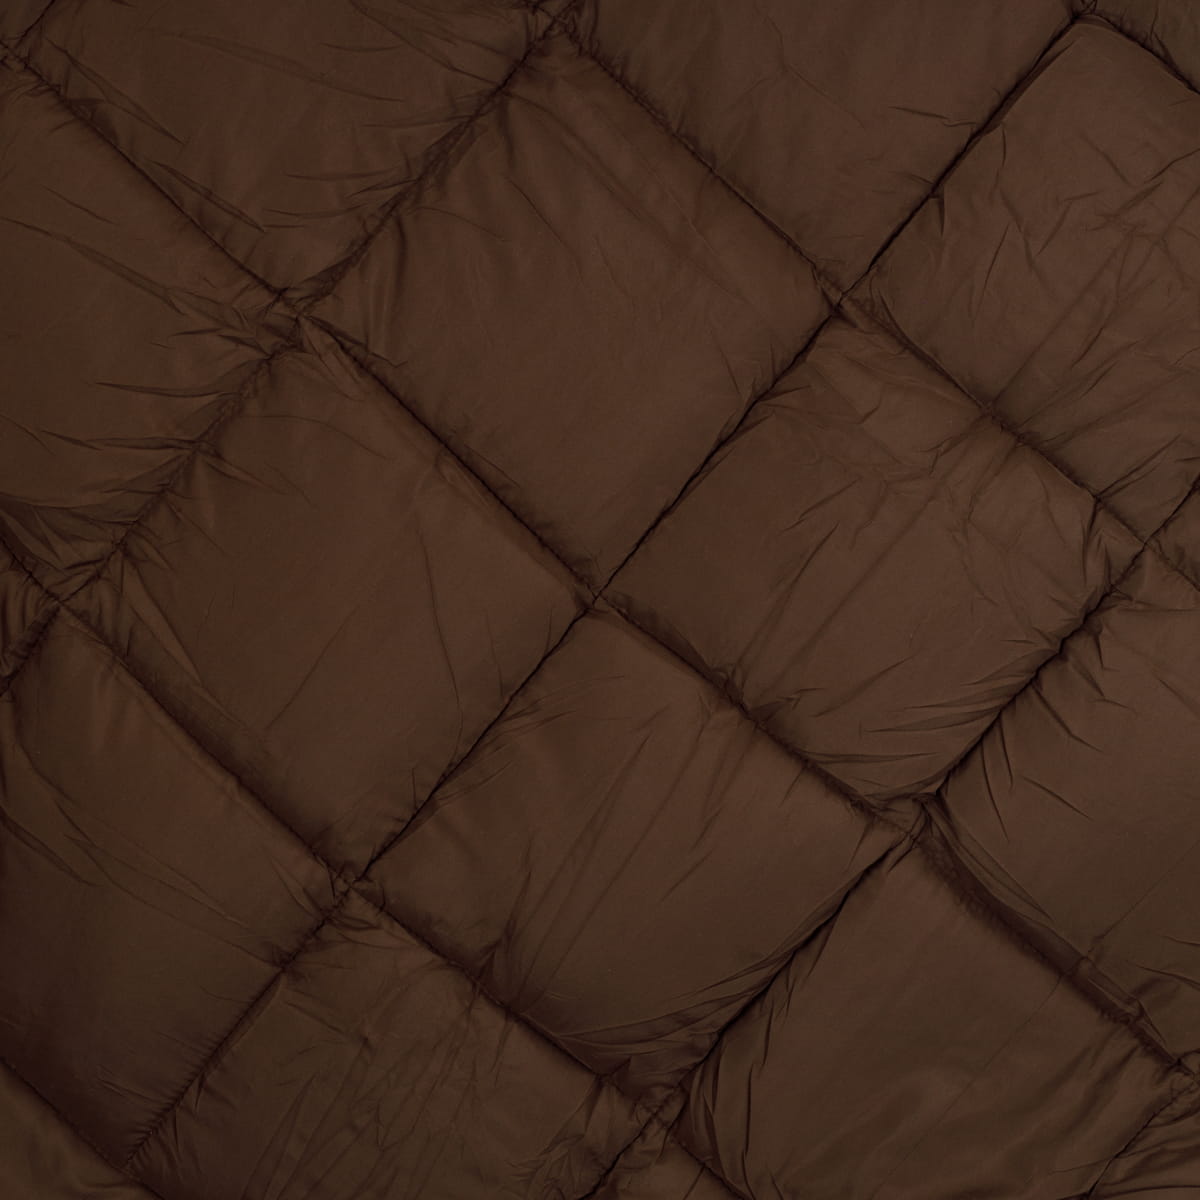 Zelesta Easybed Luxus Bettdecke Muster Schoko Farbe